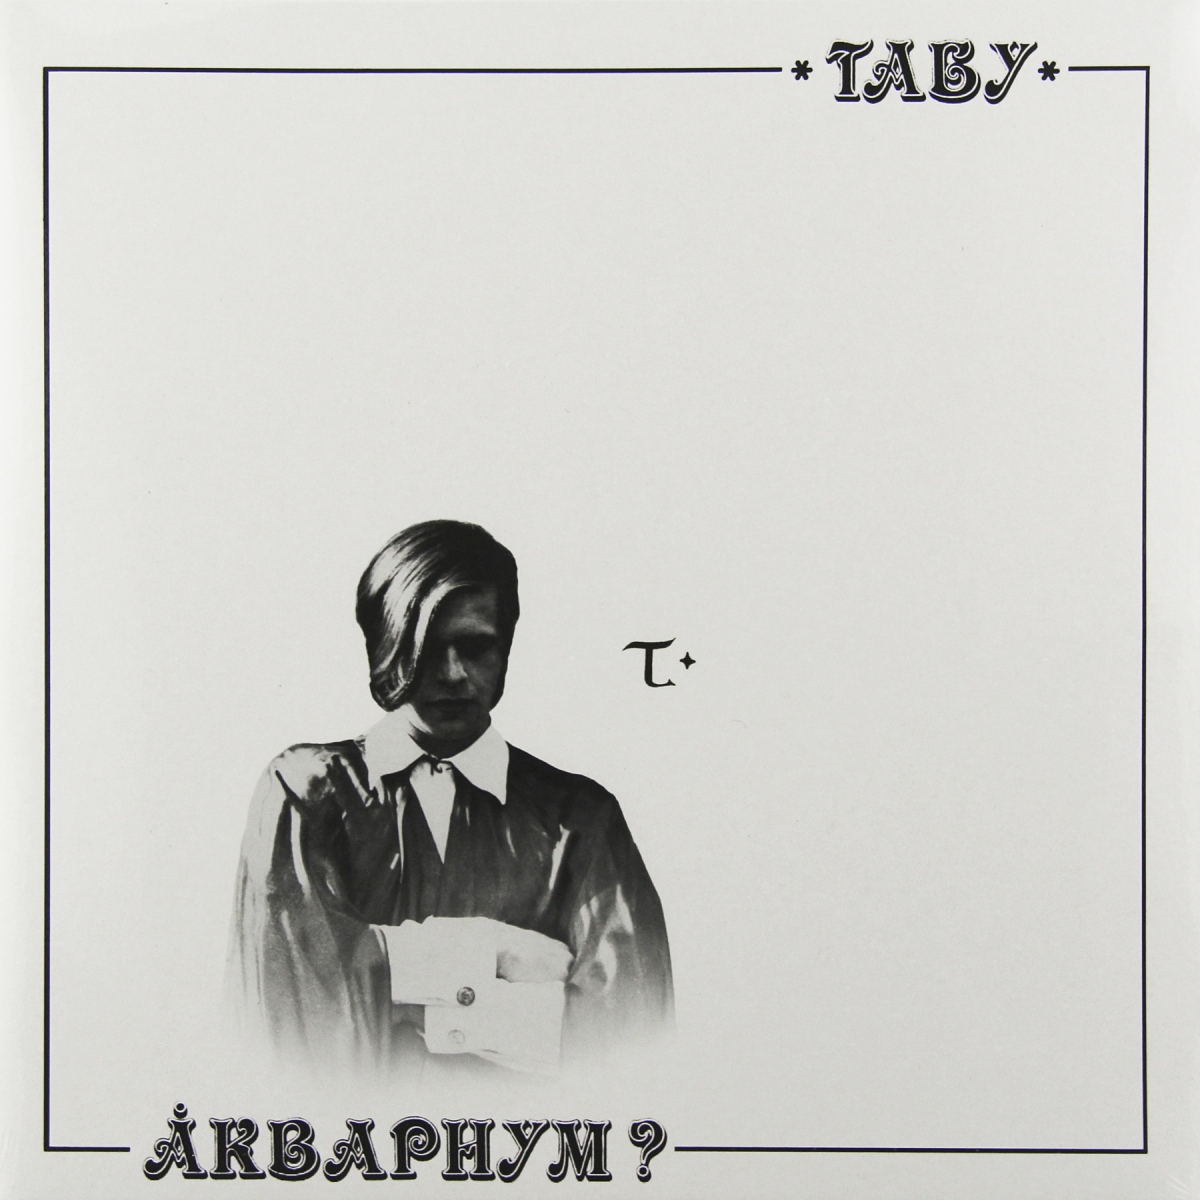 Cover of the album "Taboo" by Aquarium